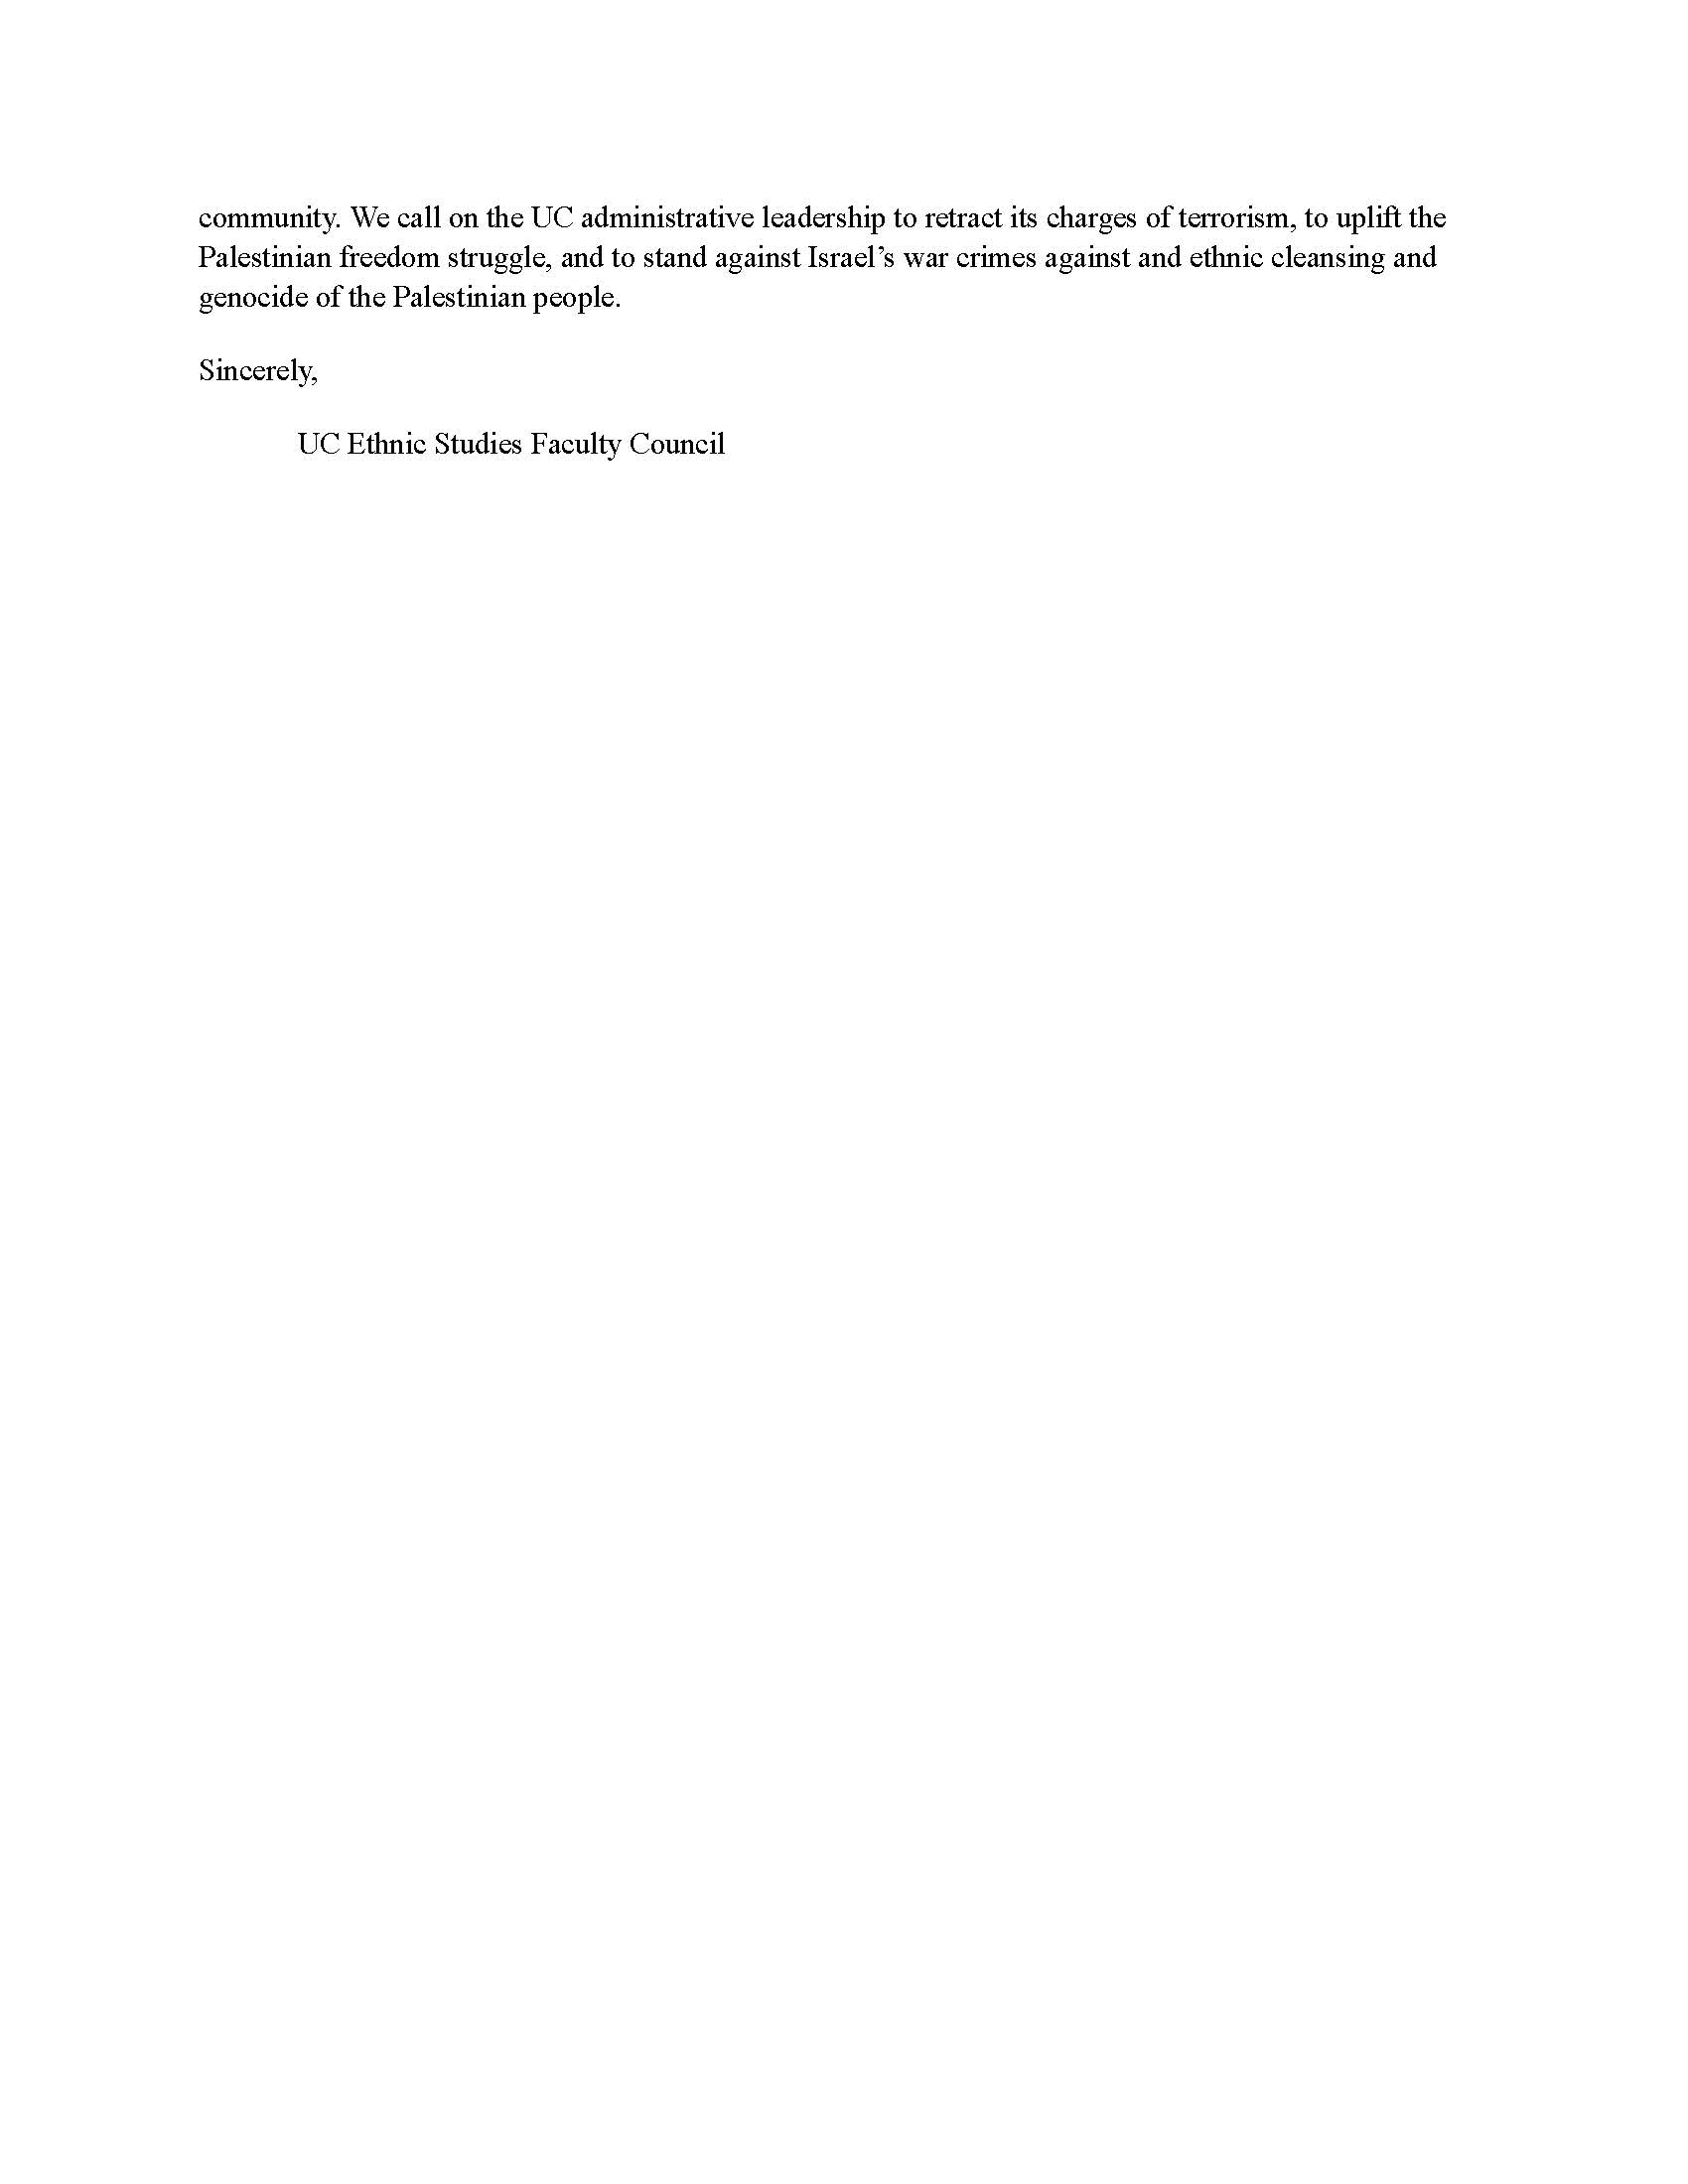 UC Statement Page 3